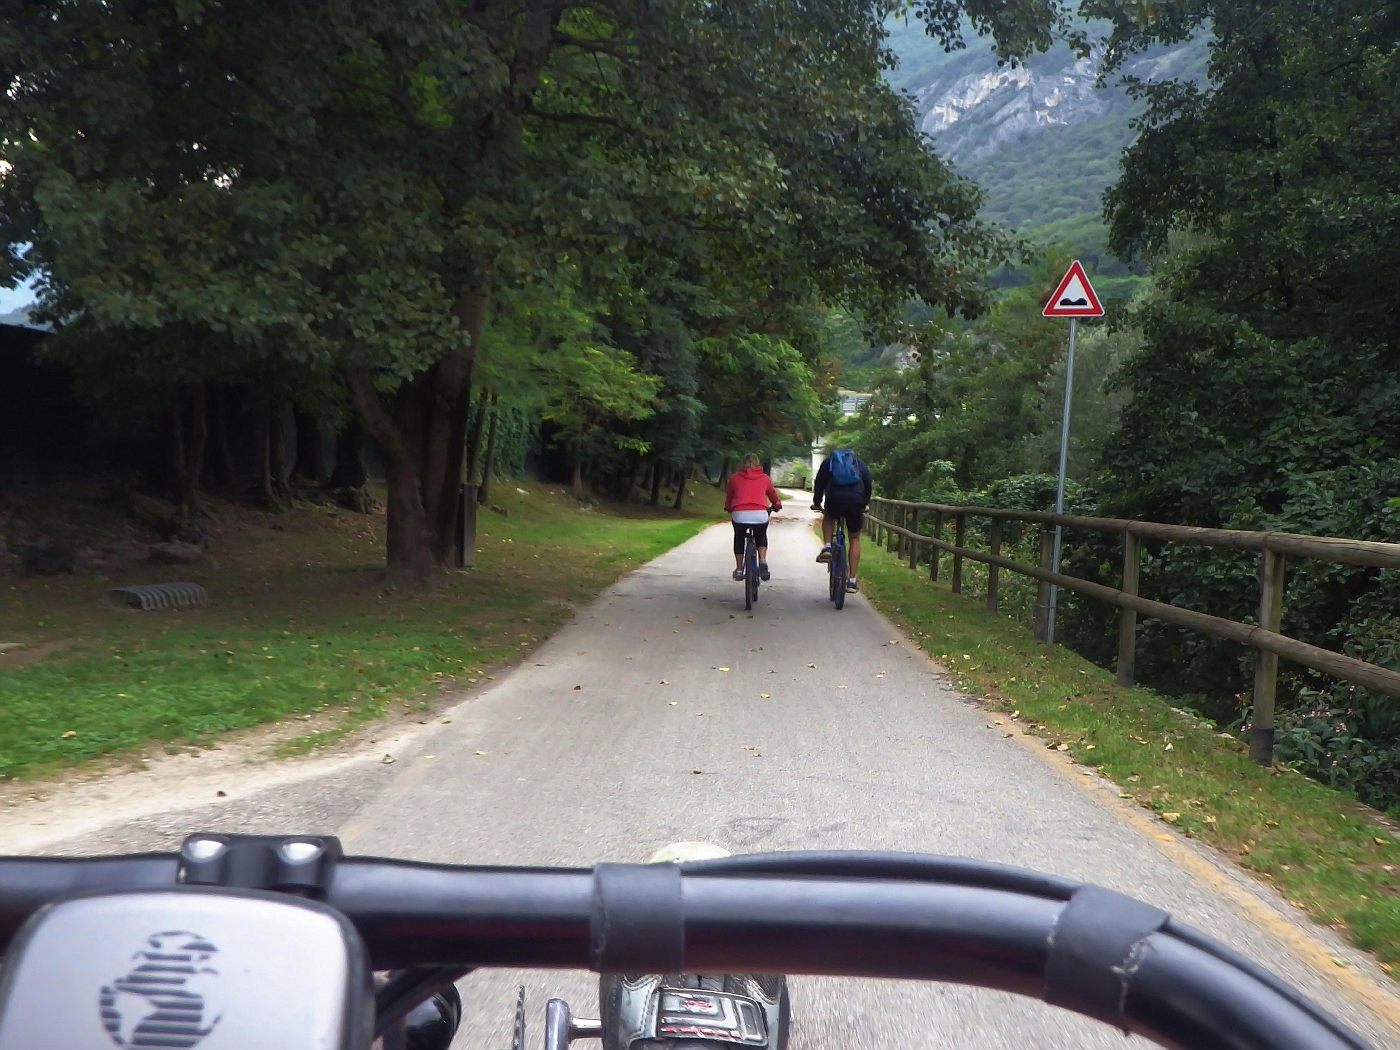 Along Adige